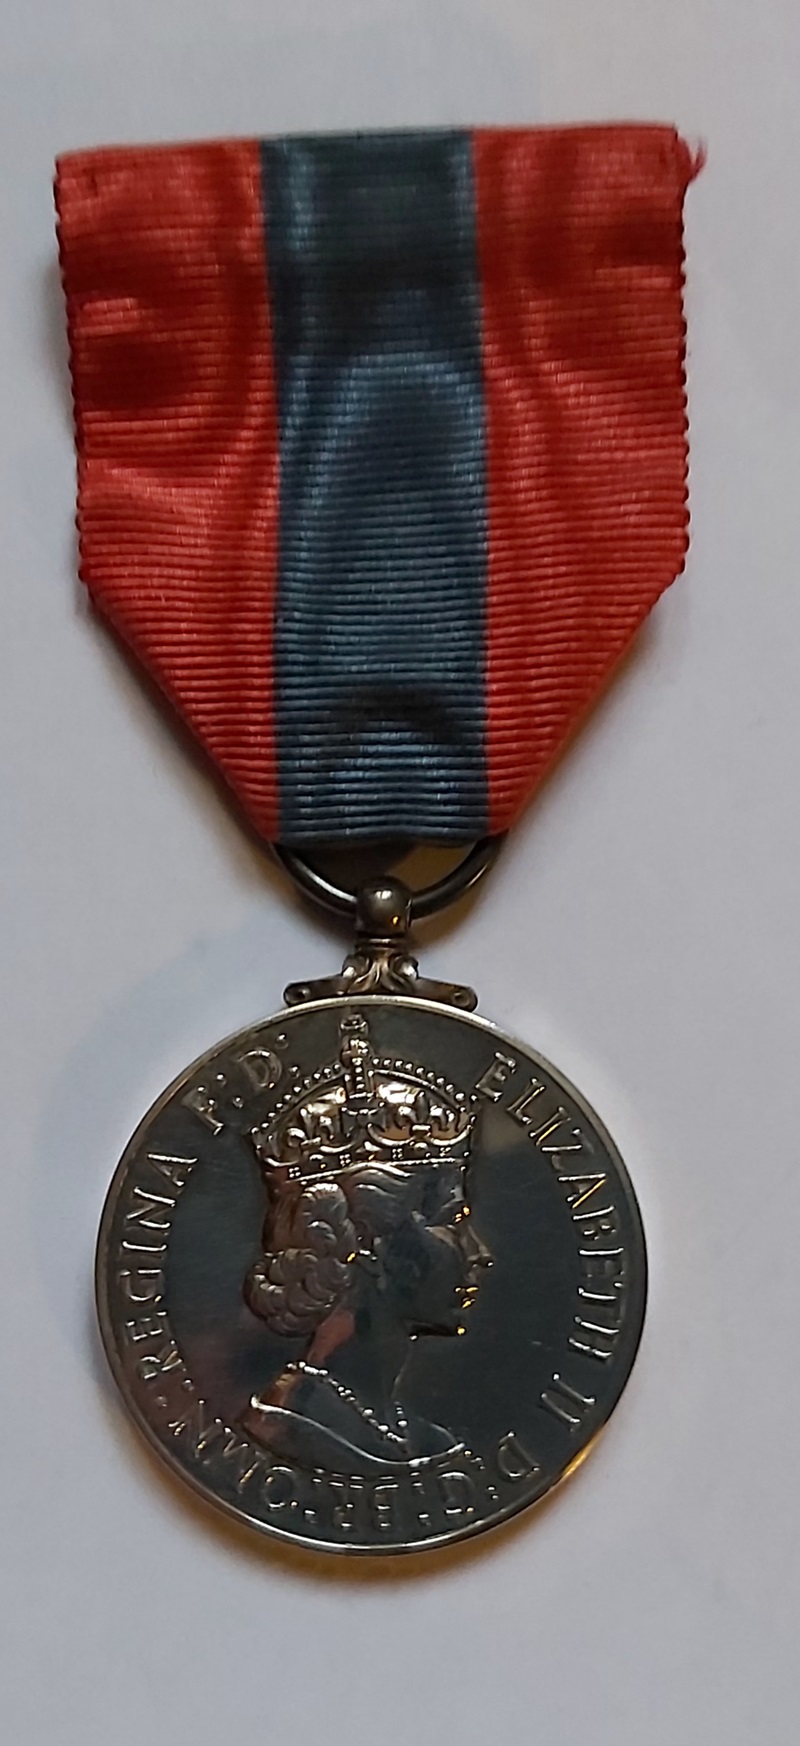 Imperial Service Medal Obverse Queen Elizabeth II